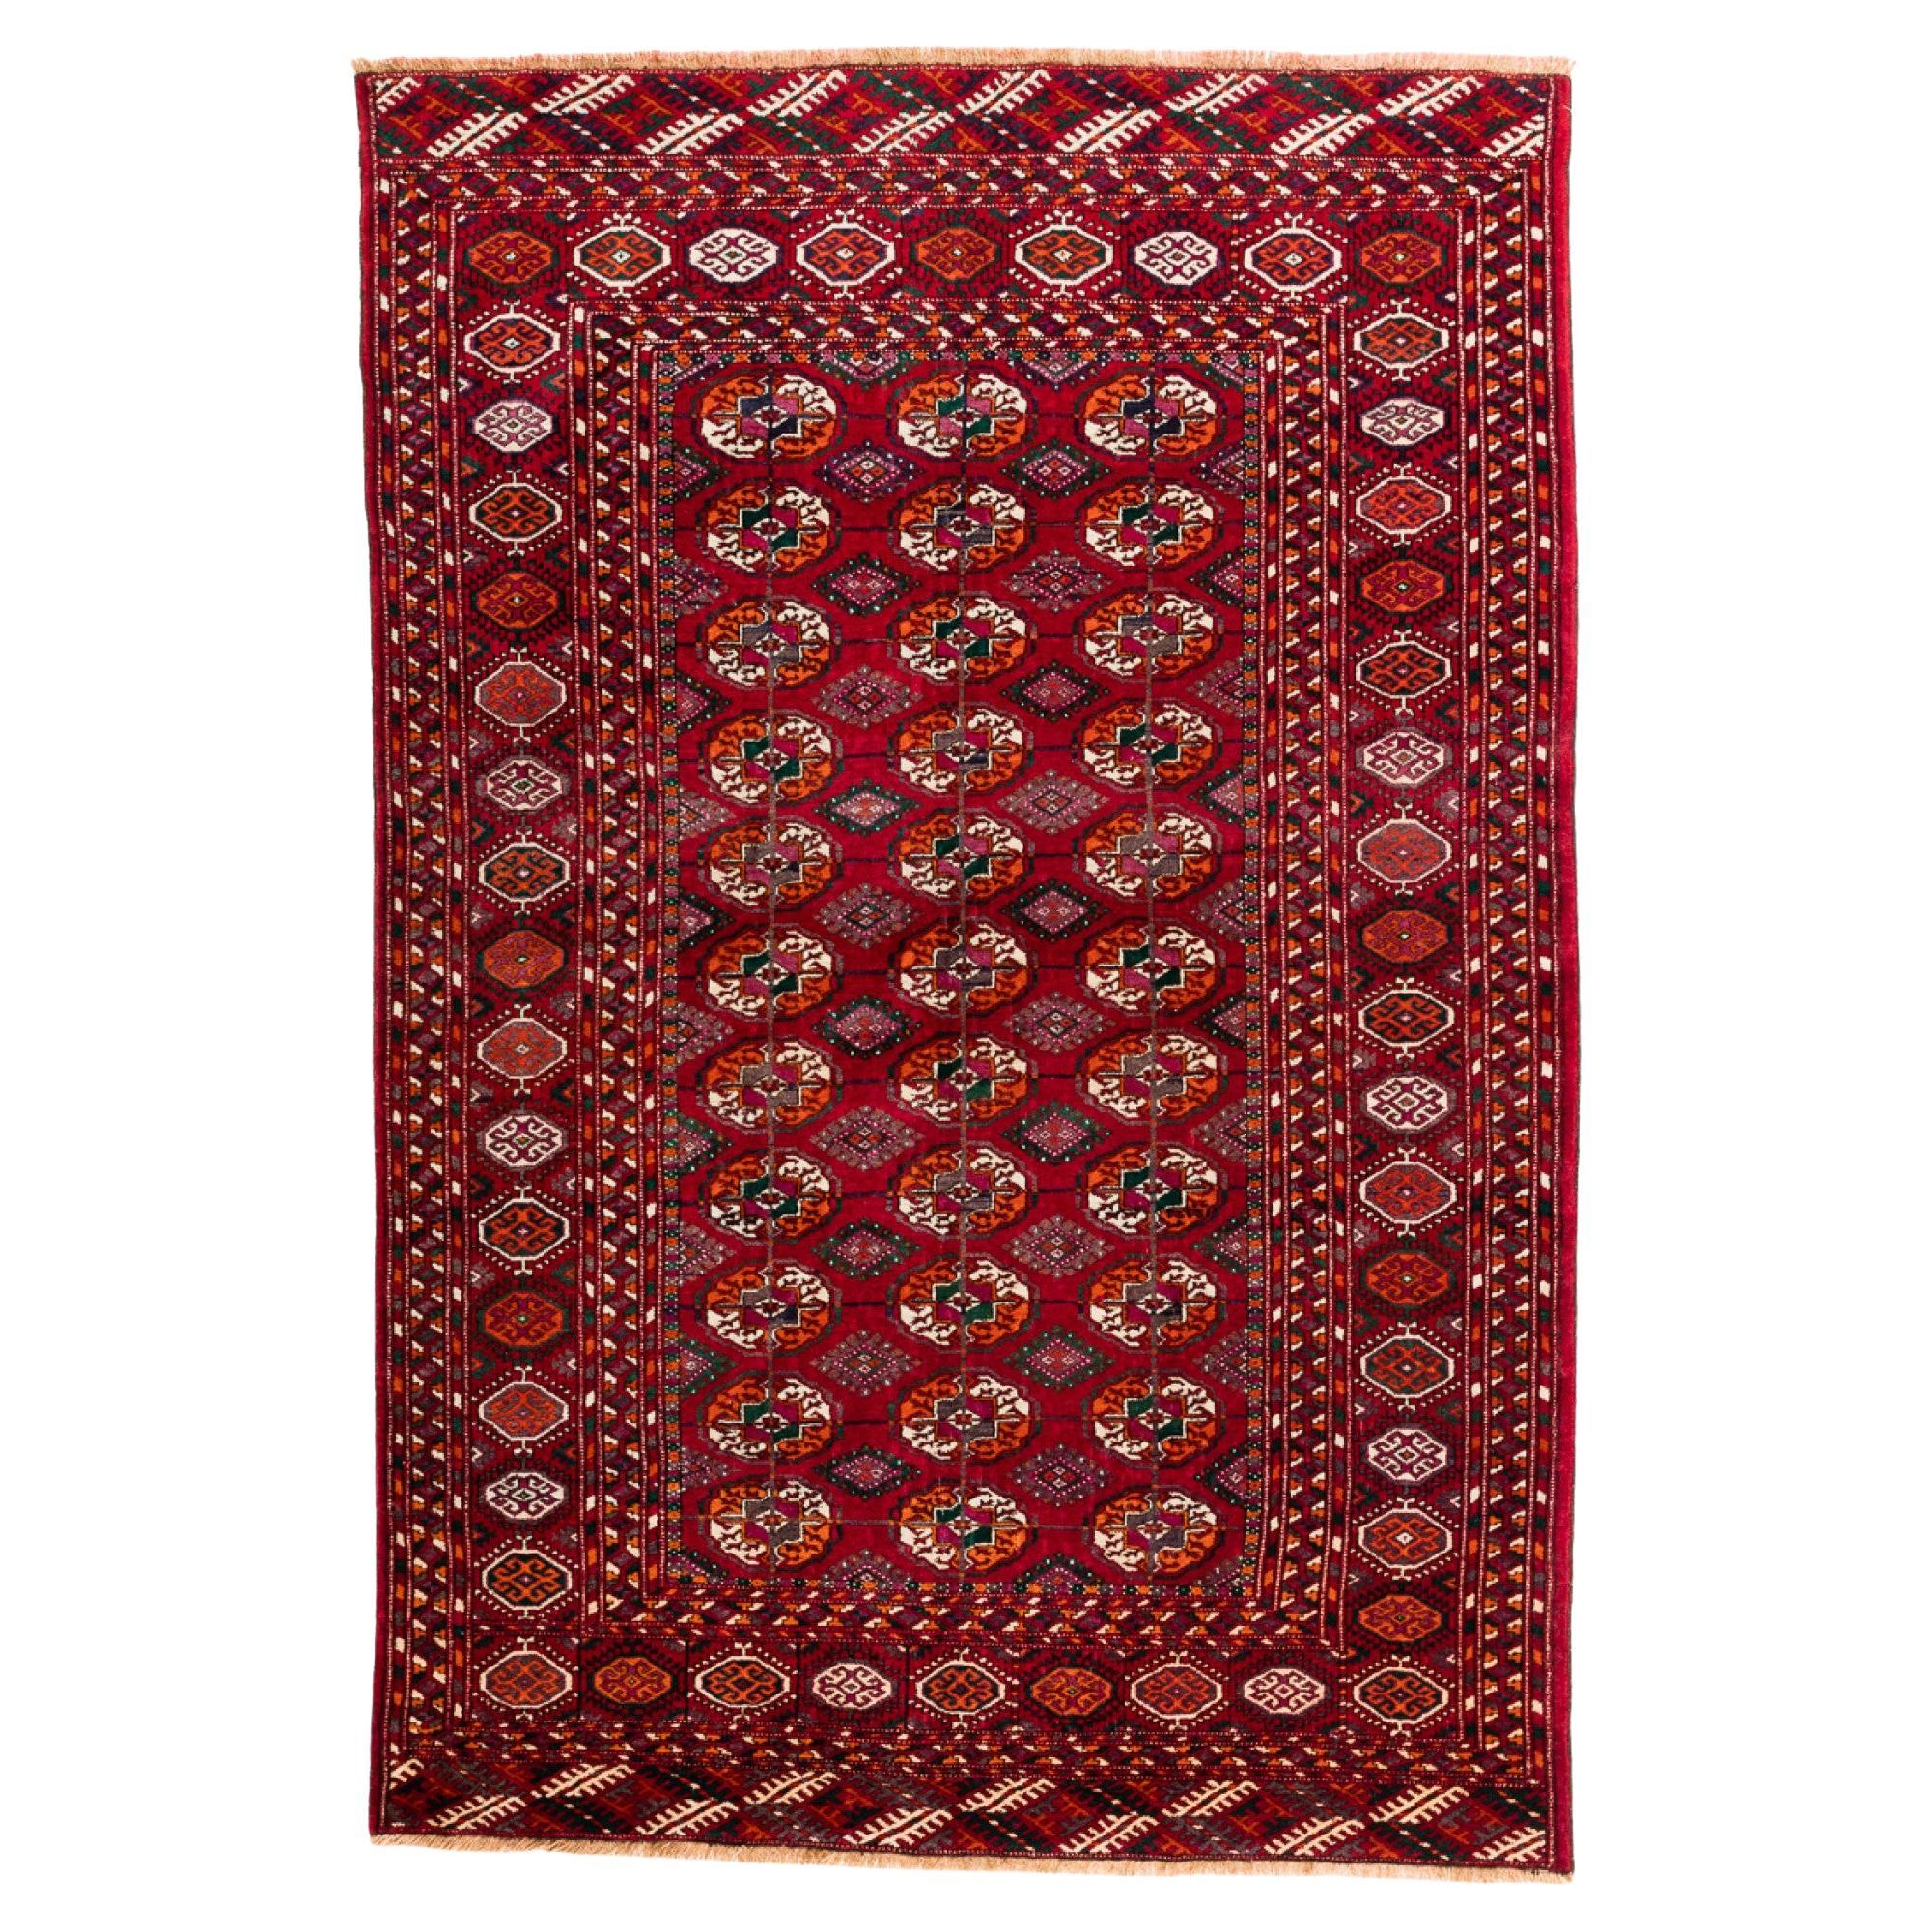 Old Vintage Tekke Bukhara Turkmen Carpet, Turkoman Rug